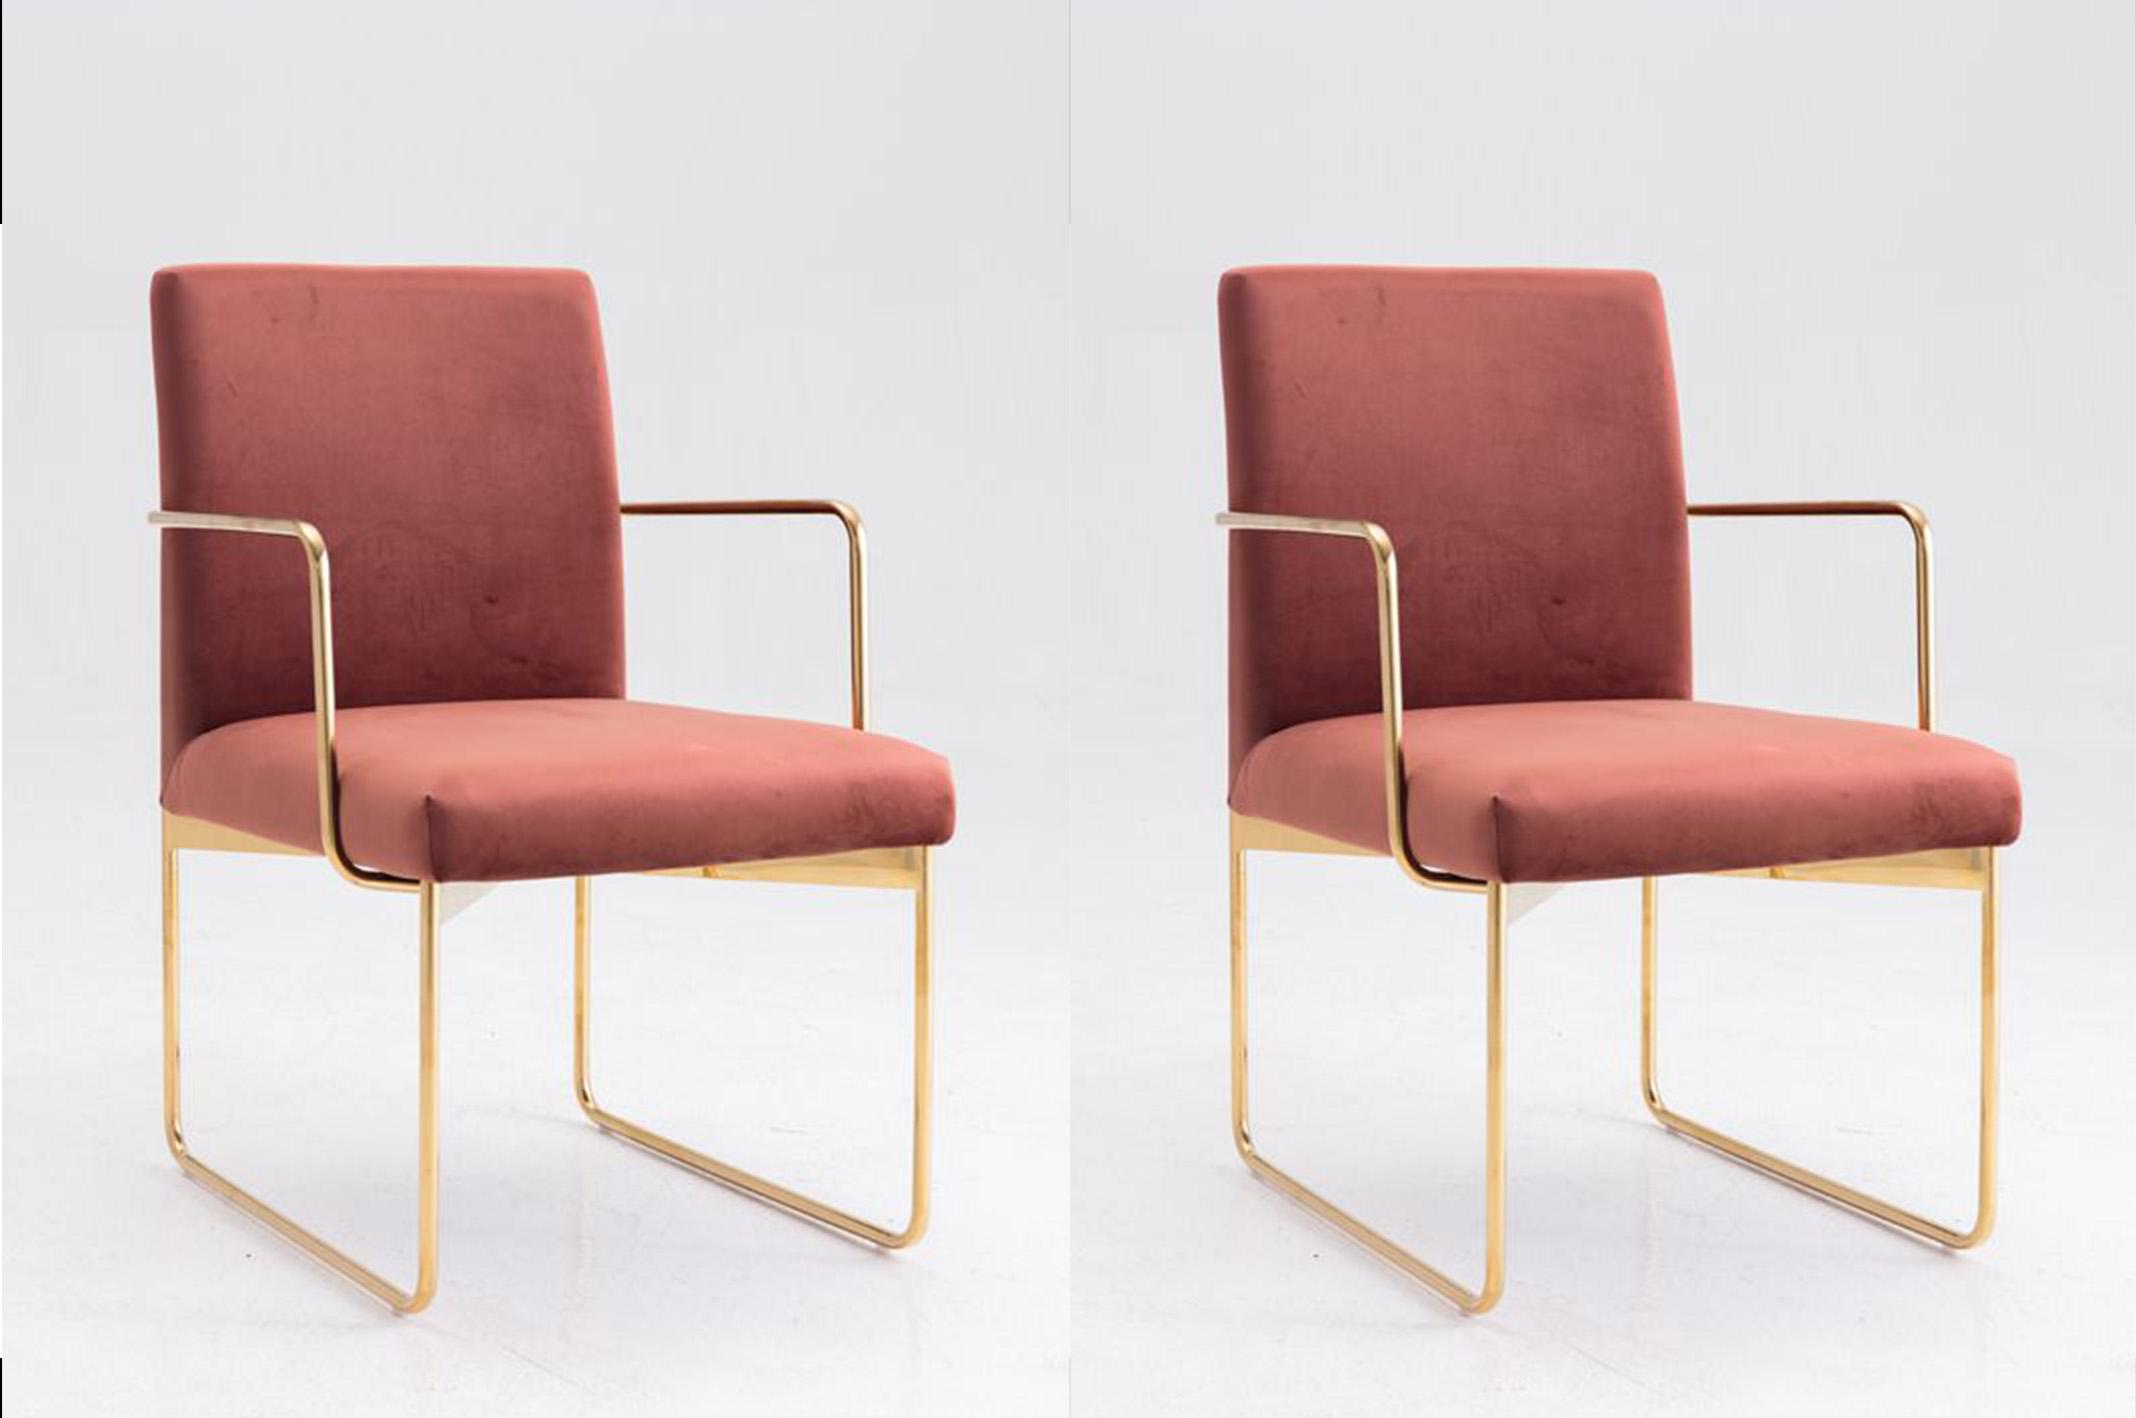 Contemporary, Modern Dining Chair Set VGSFAC-018G-SAL VGSFAC-018G-SAL in Copper Fabric